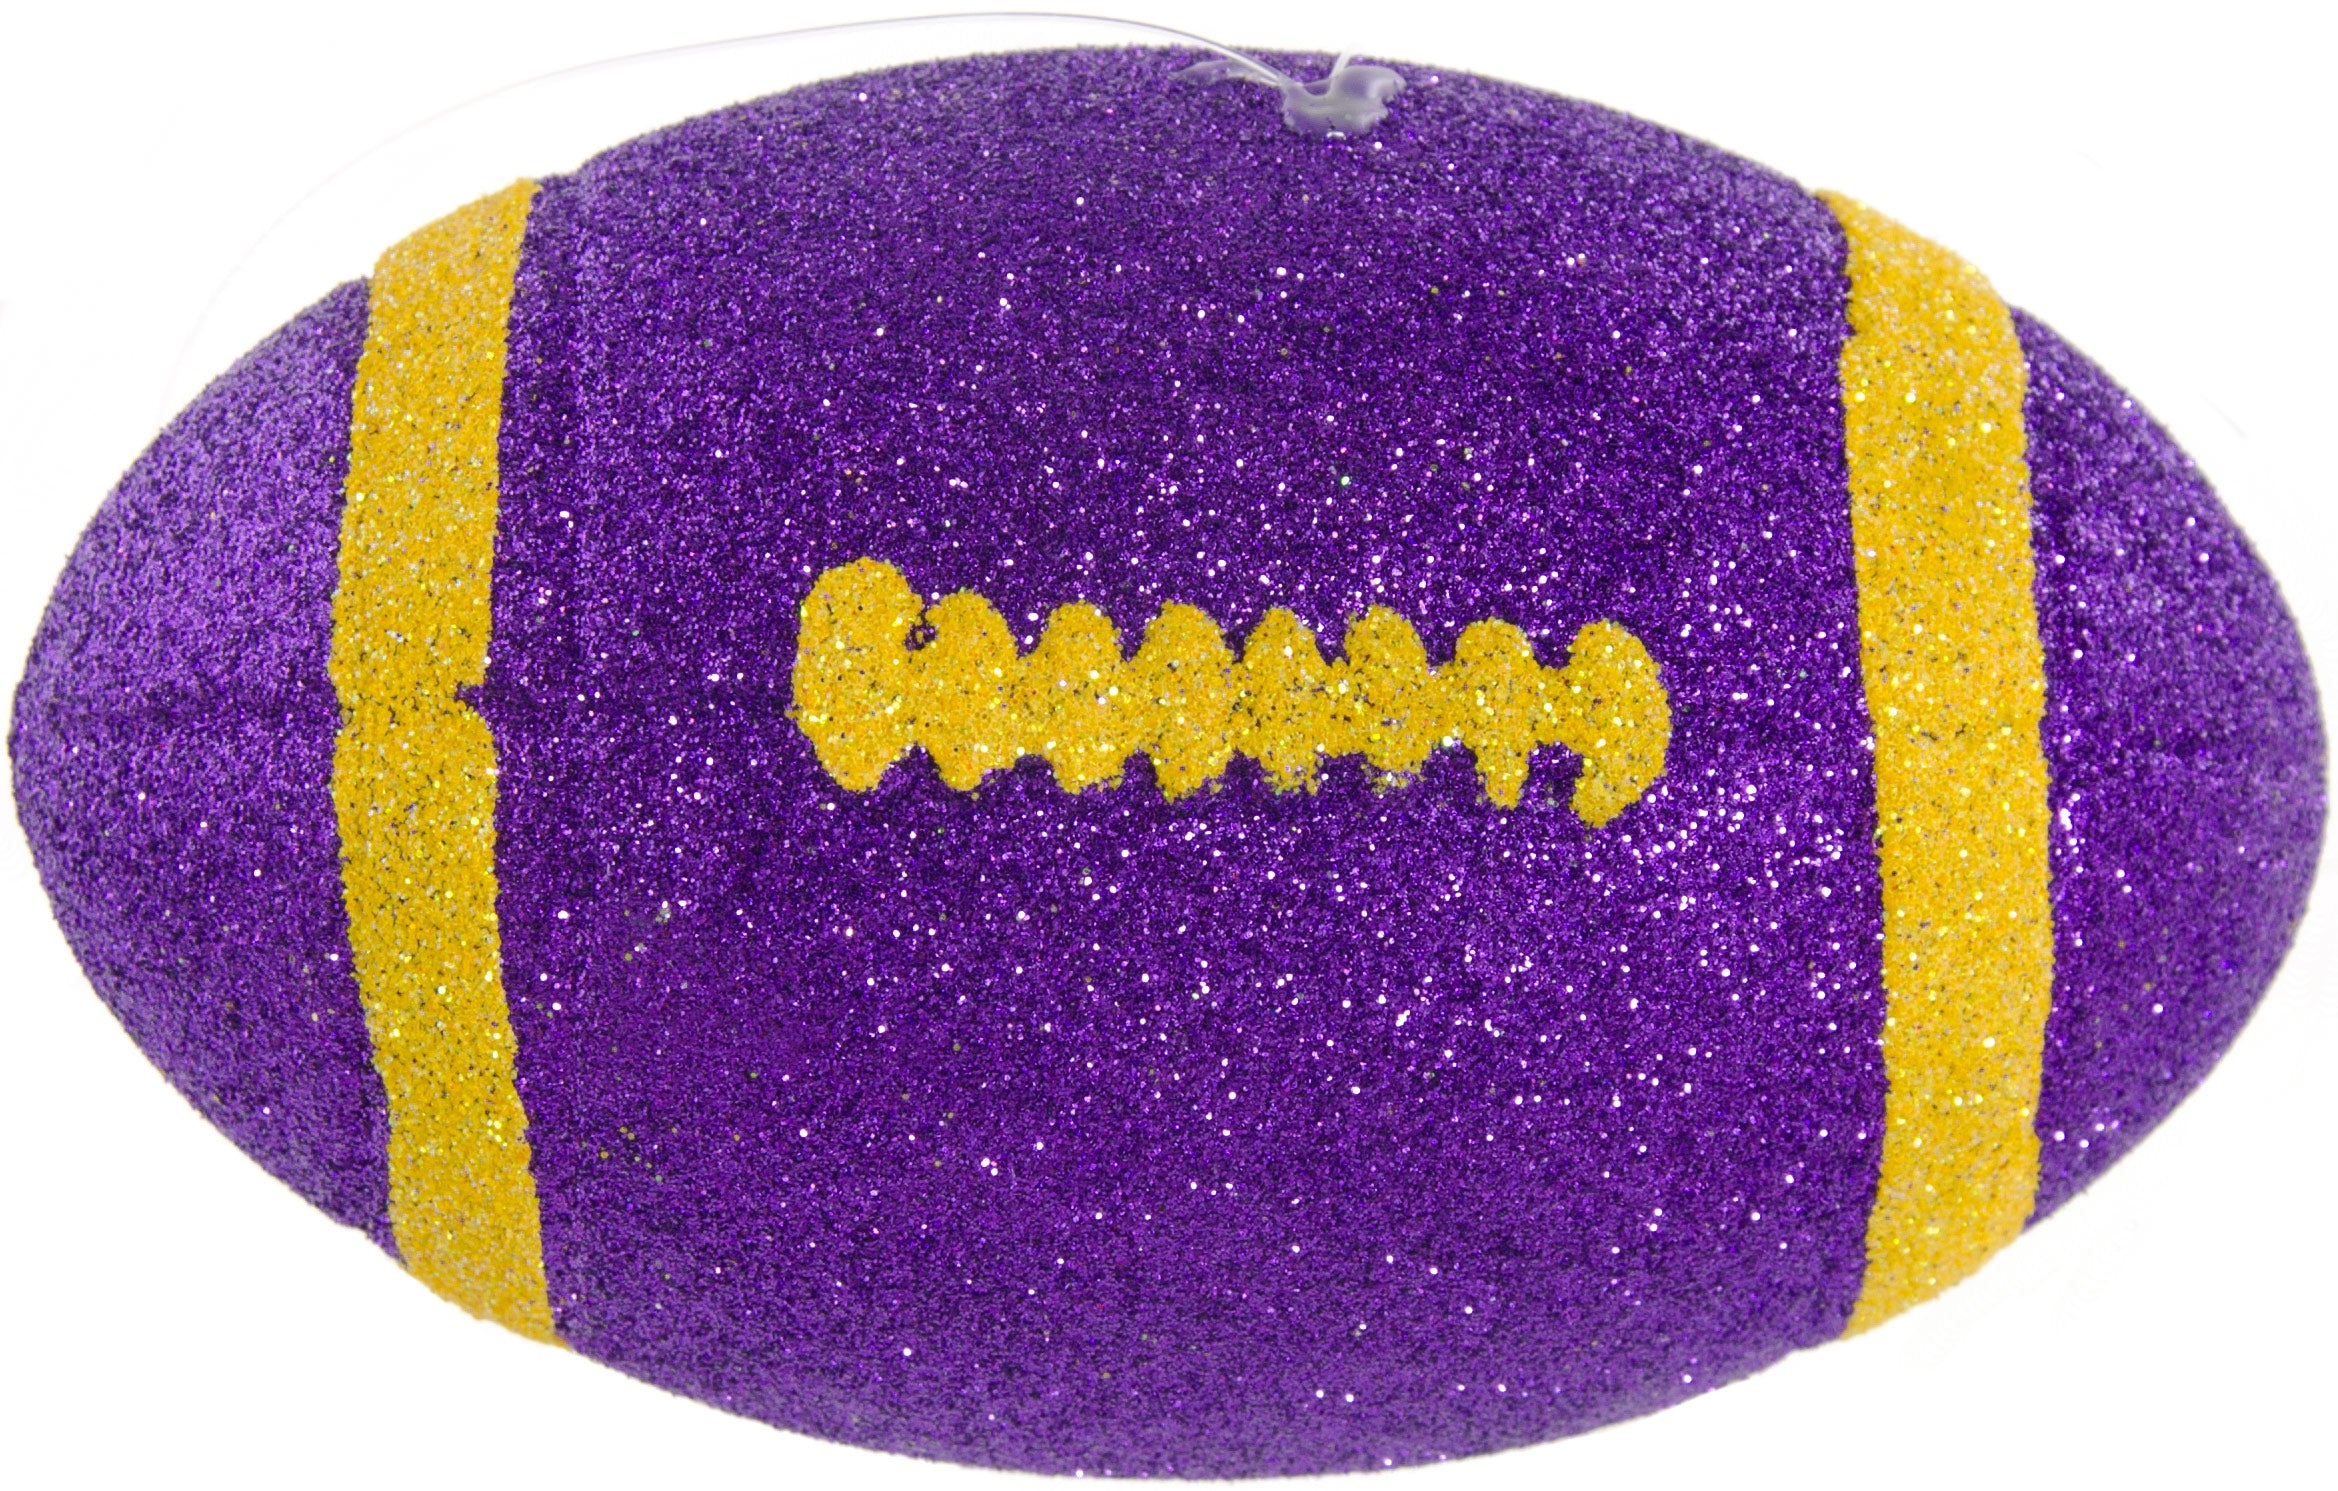 Glitter Football Ornament Assortment: Gold & Purple (Set of 3)